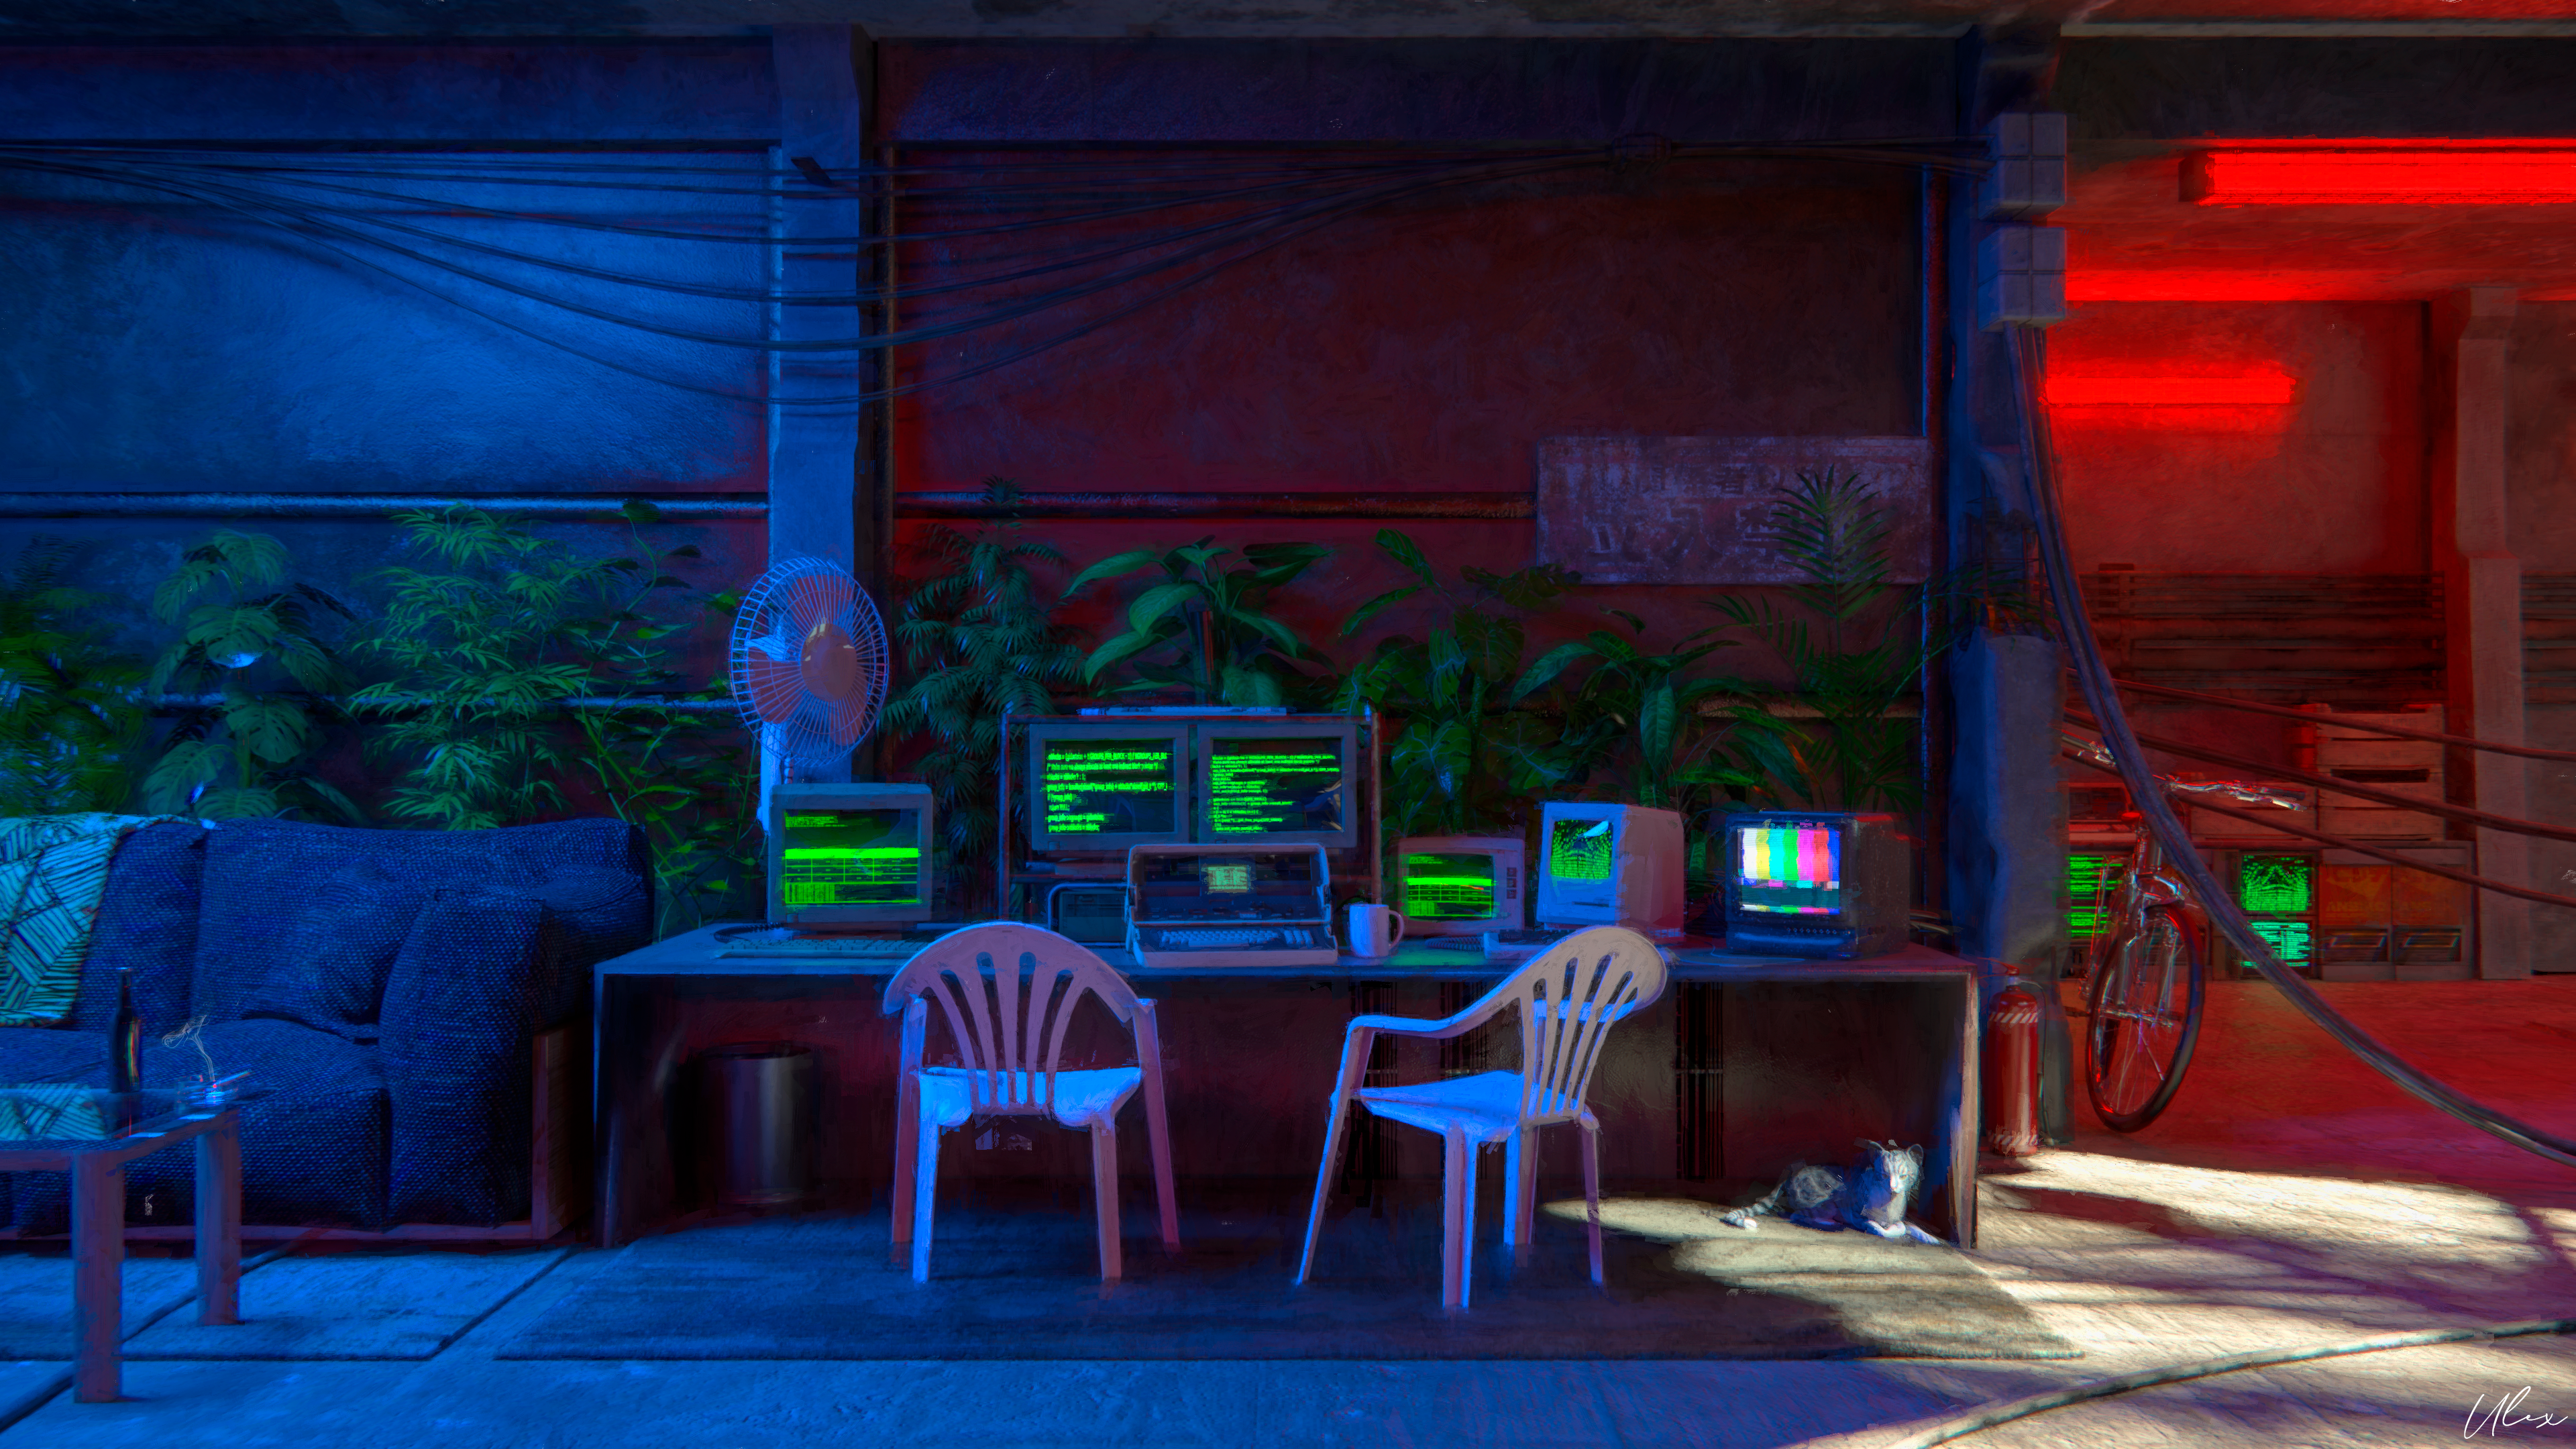 General 3840x2160 CGI digital art Blender shaders oil painting hacking 1980s plants neon basement cats cellars Hong Kong